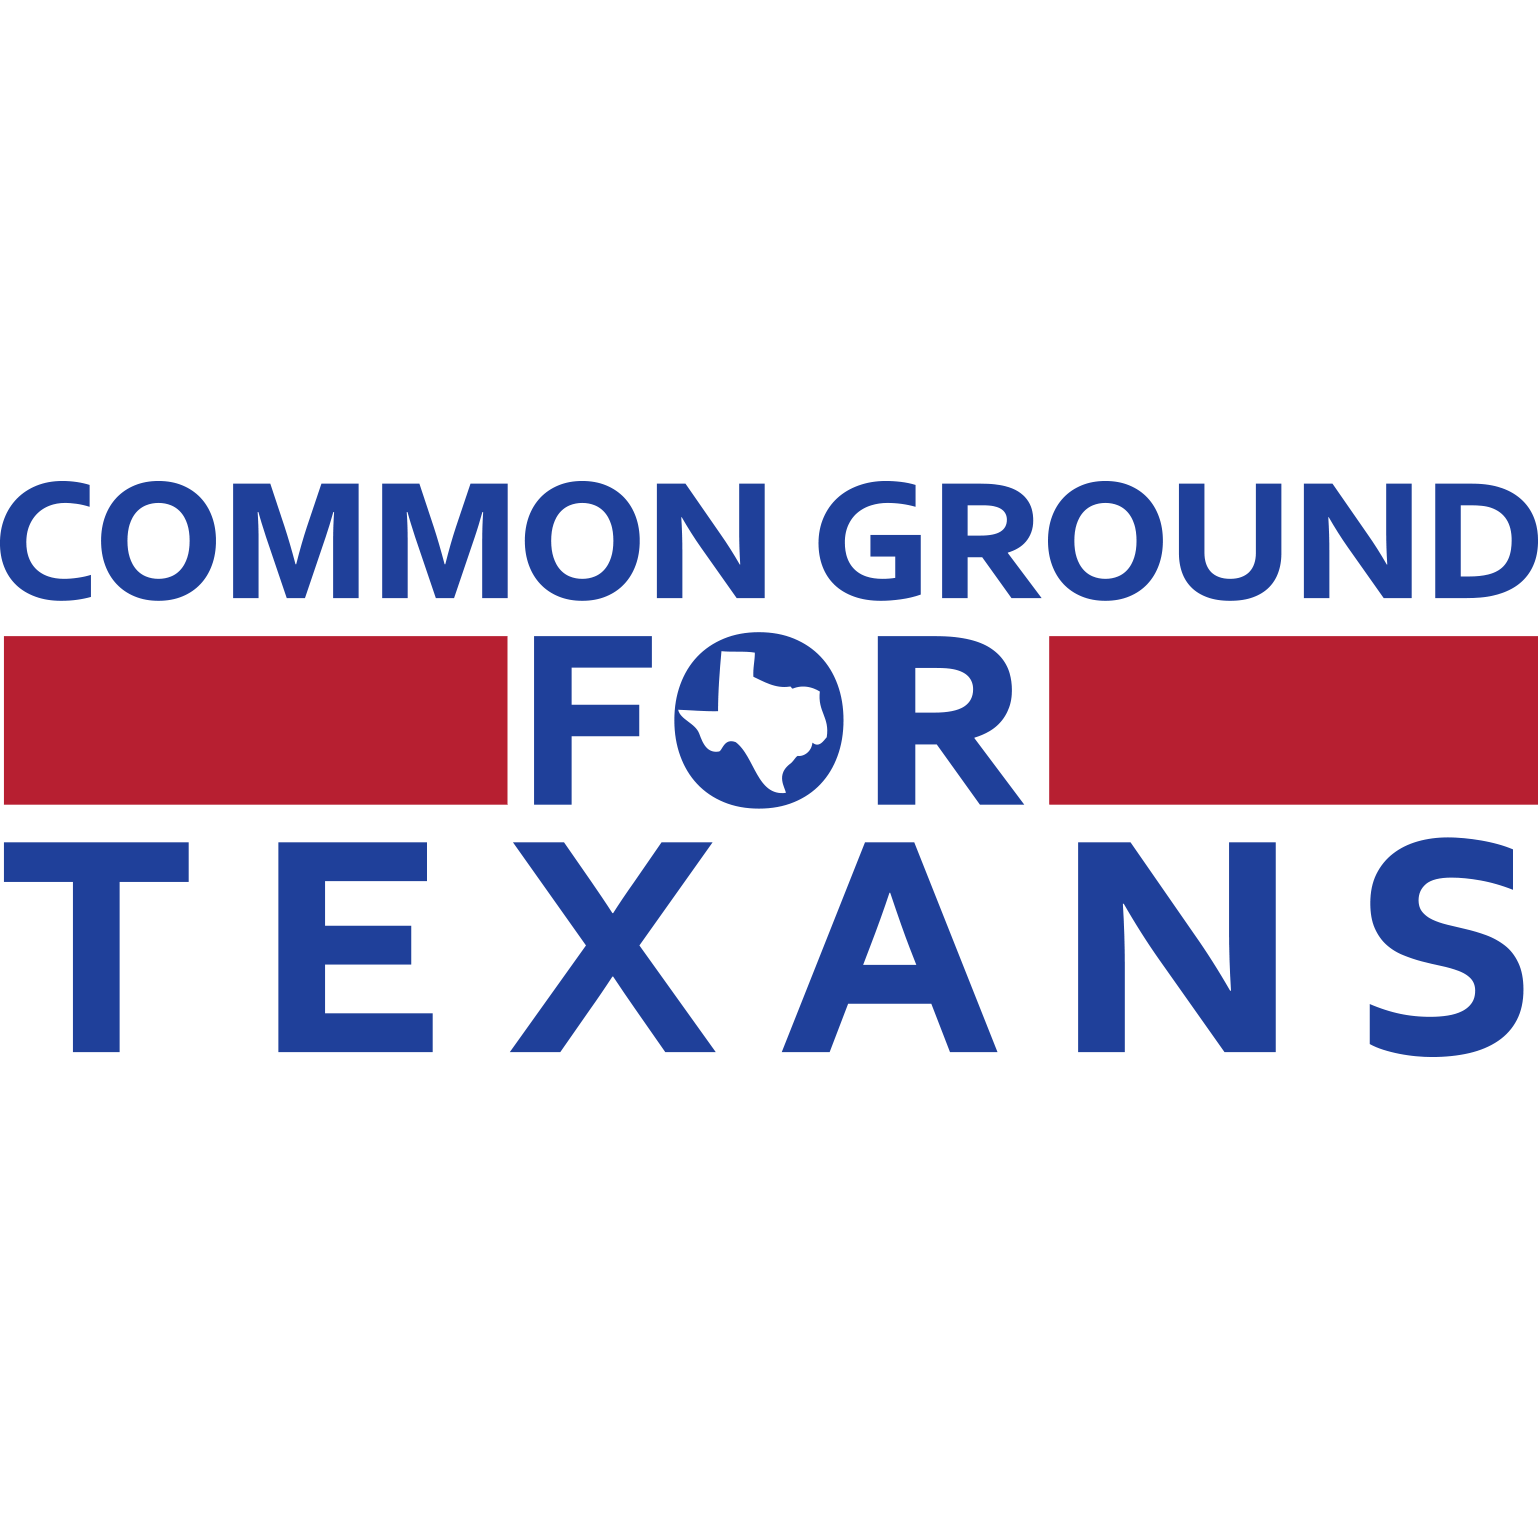 Common Ground for Texans logo